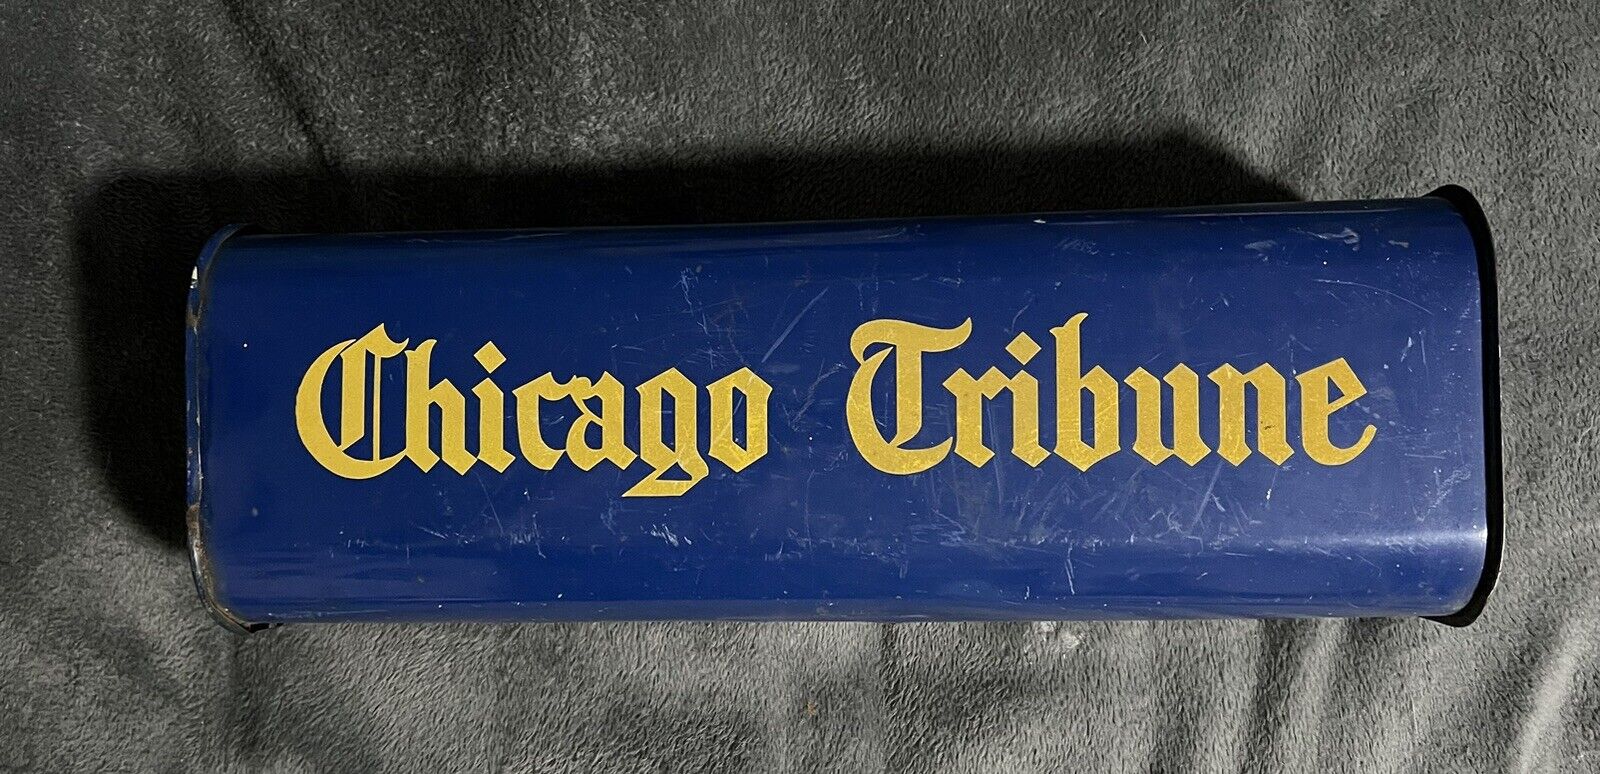 Vintage Chicago Tribune Home Delivery Metal Box